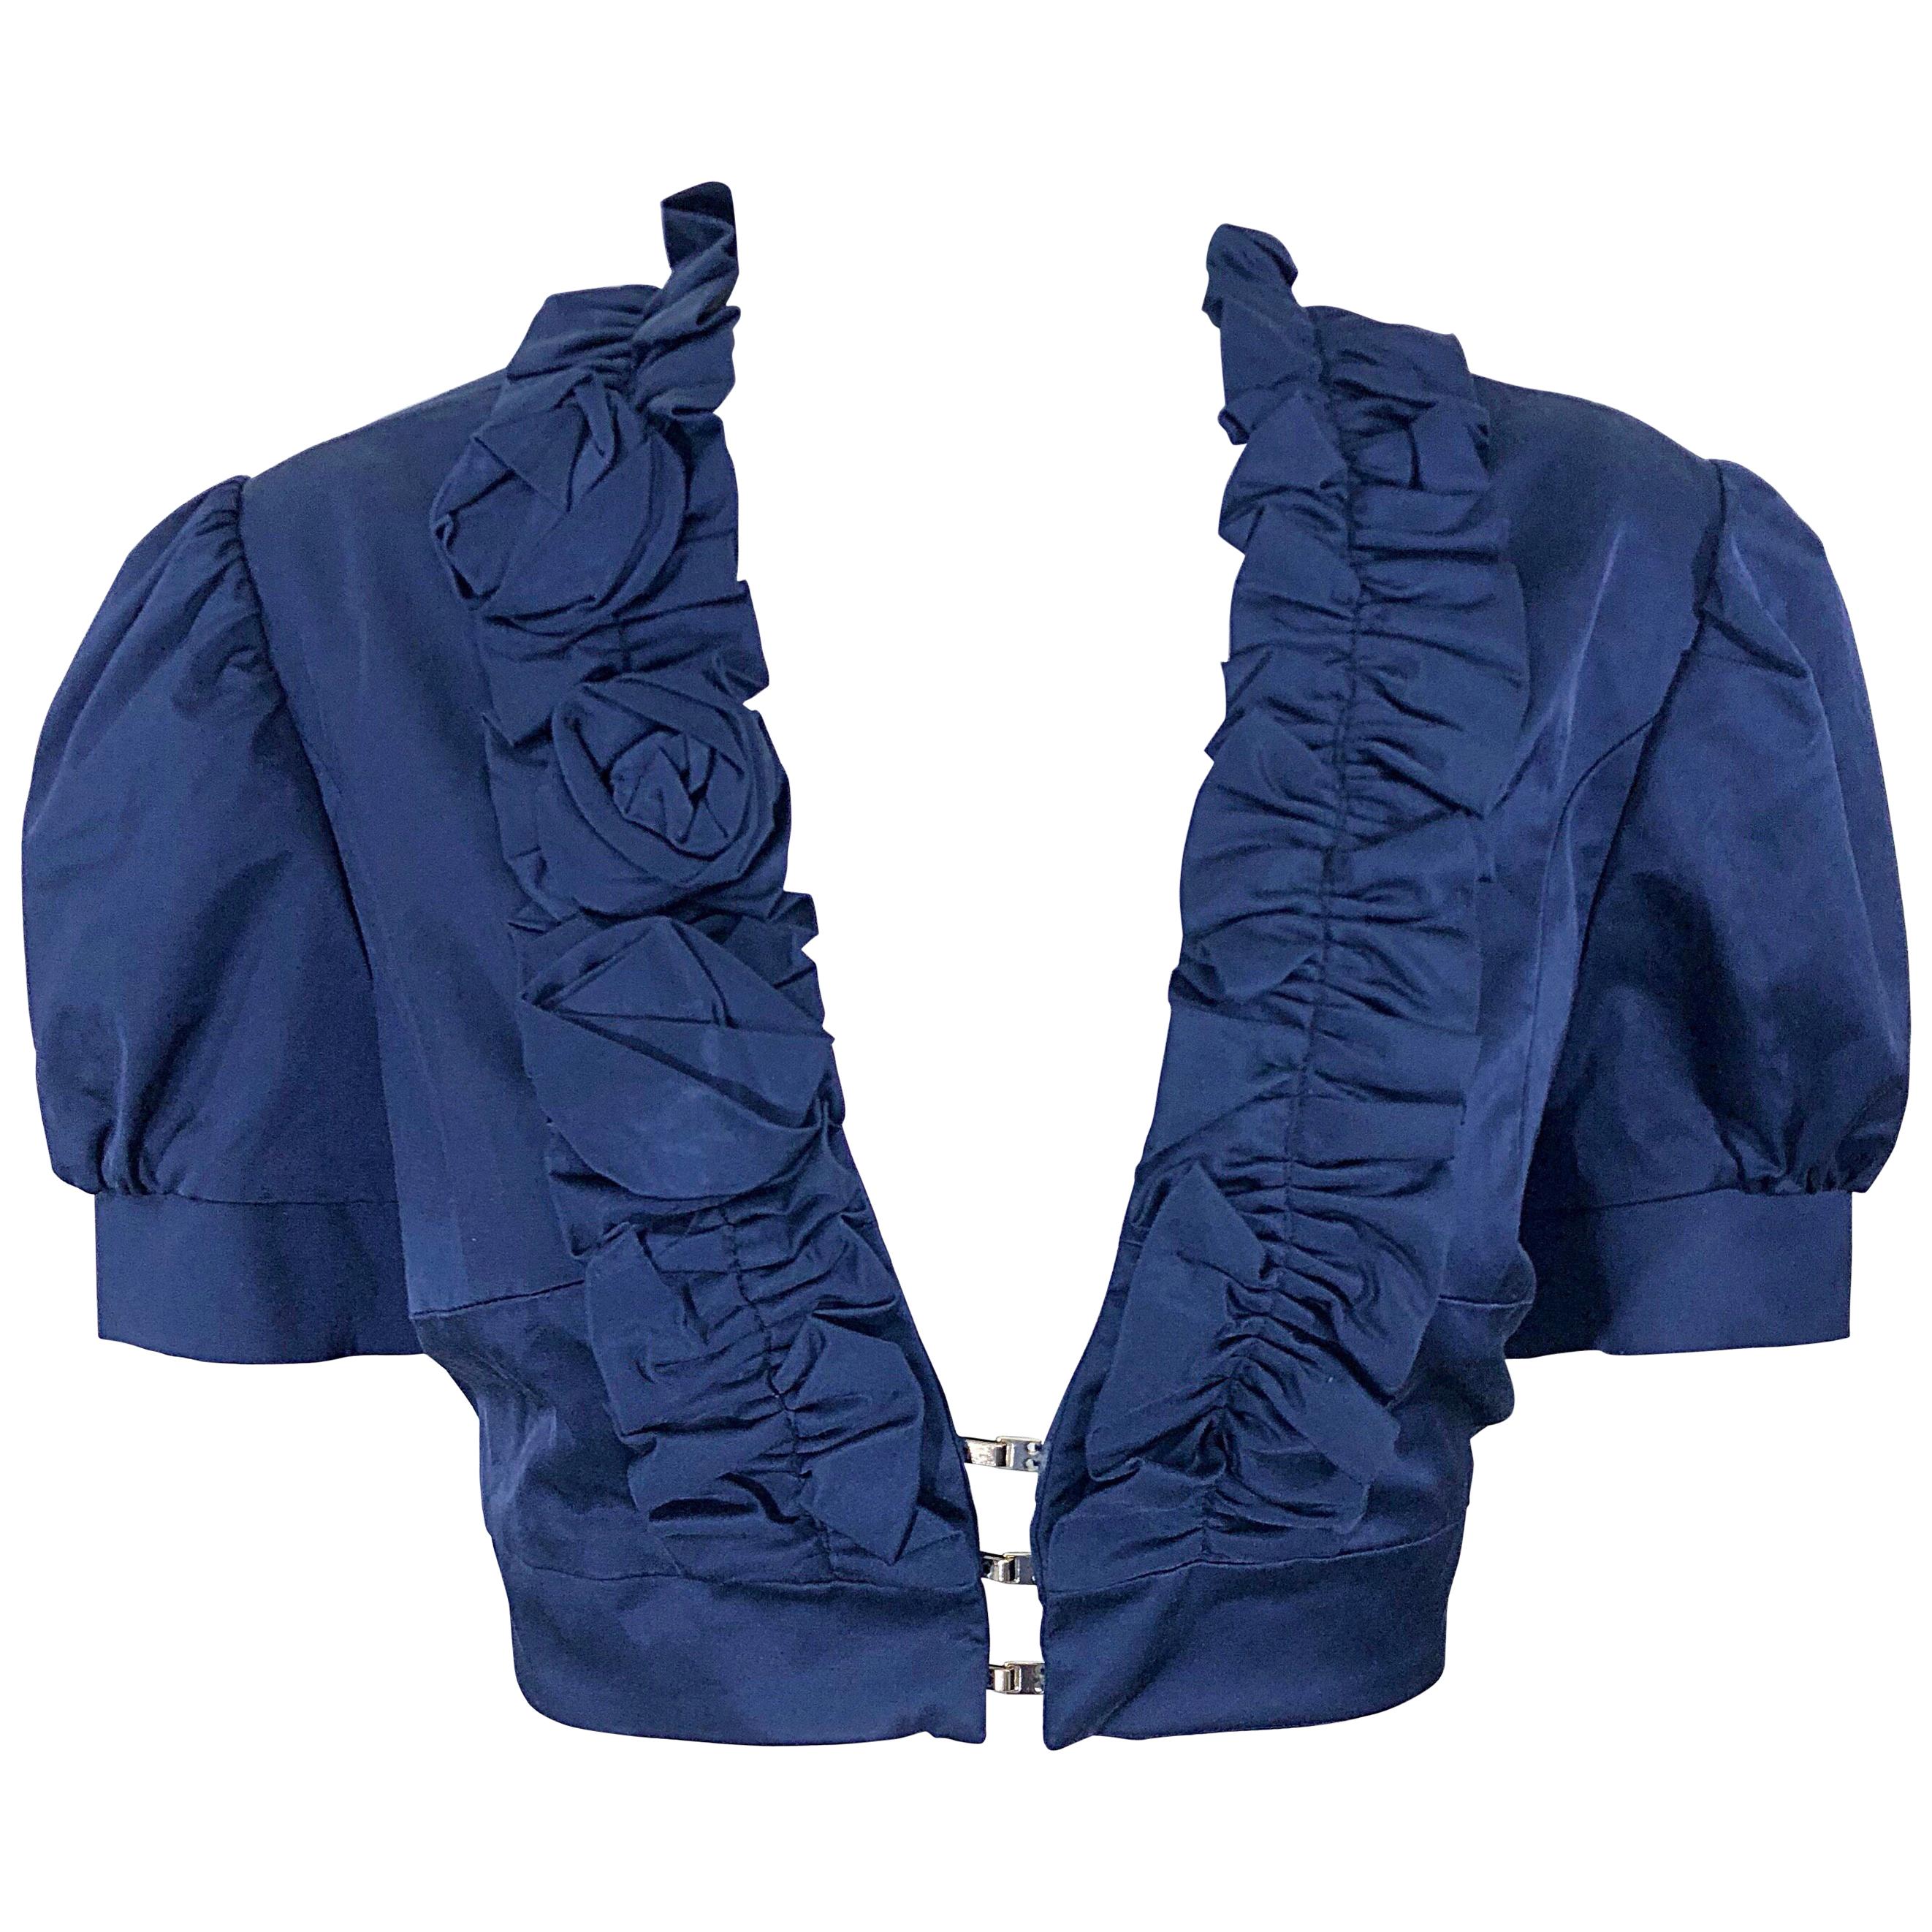 New Flavio Castellani Navy Blue Short Sleeve Rosette Cropped Bolero Jacket Top